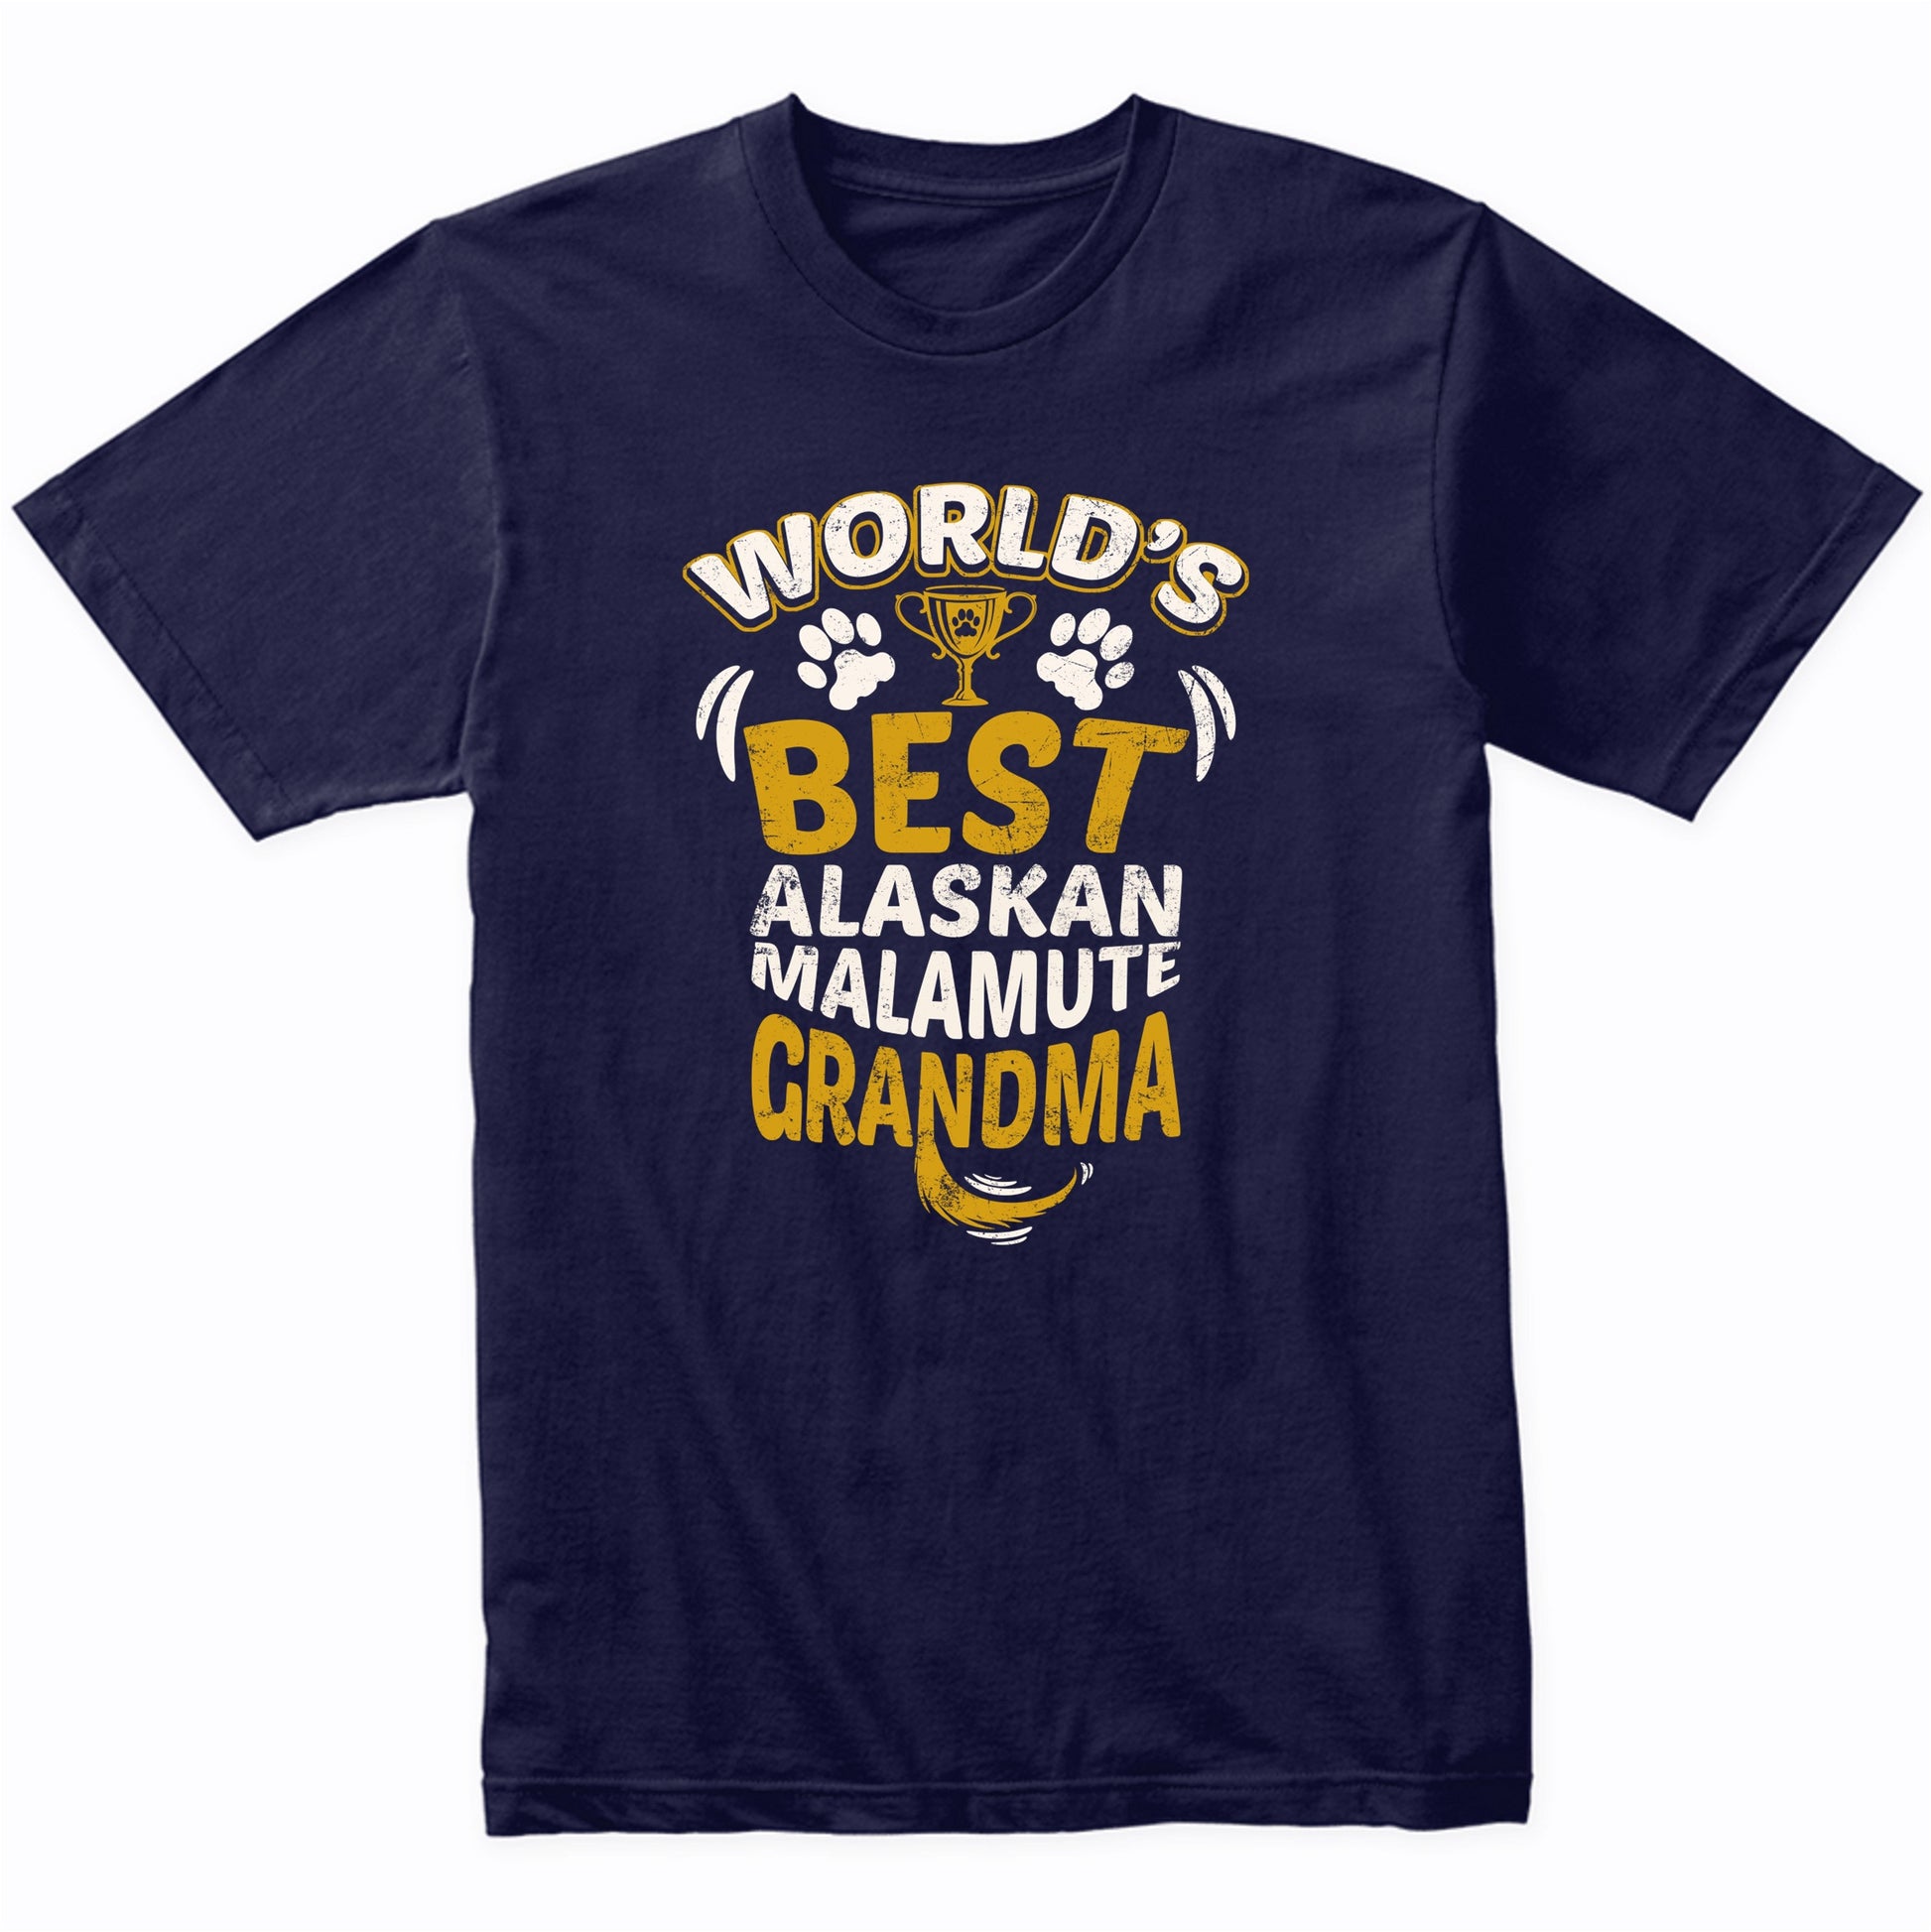 World's Best Alaskan Malamute Grandma Graphic T-Shirt